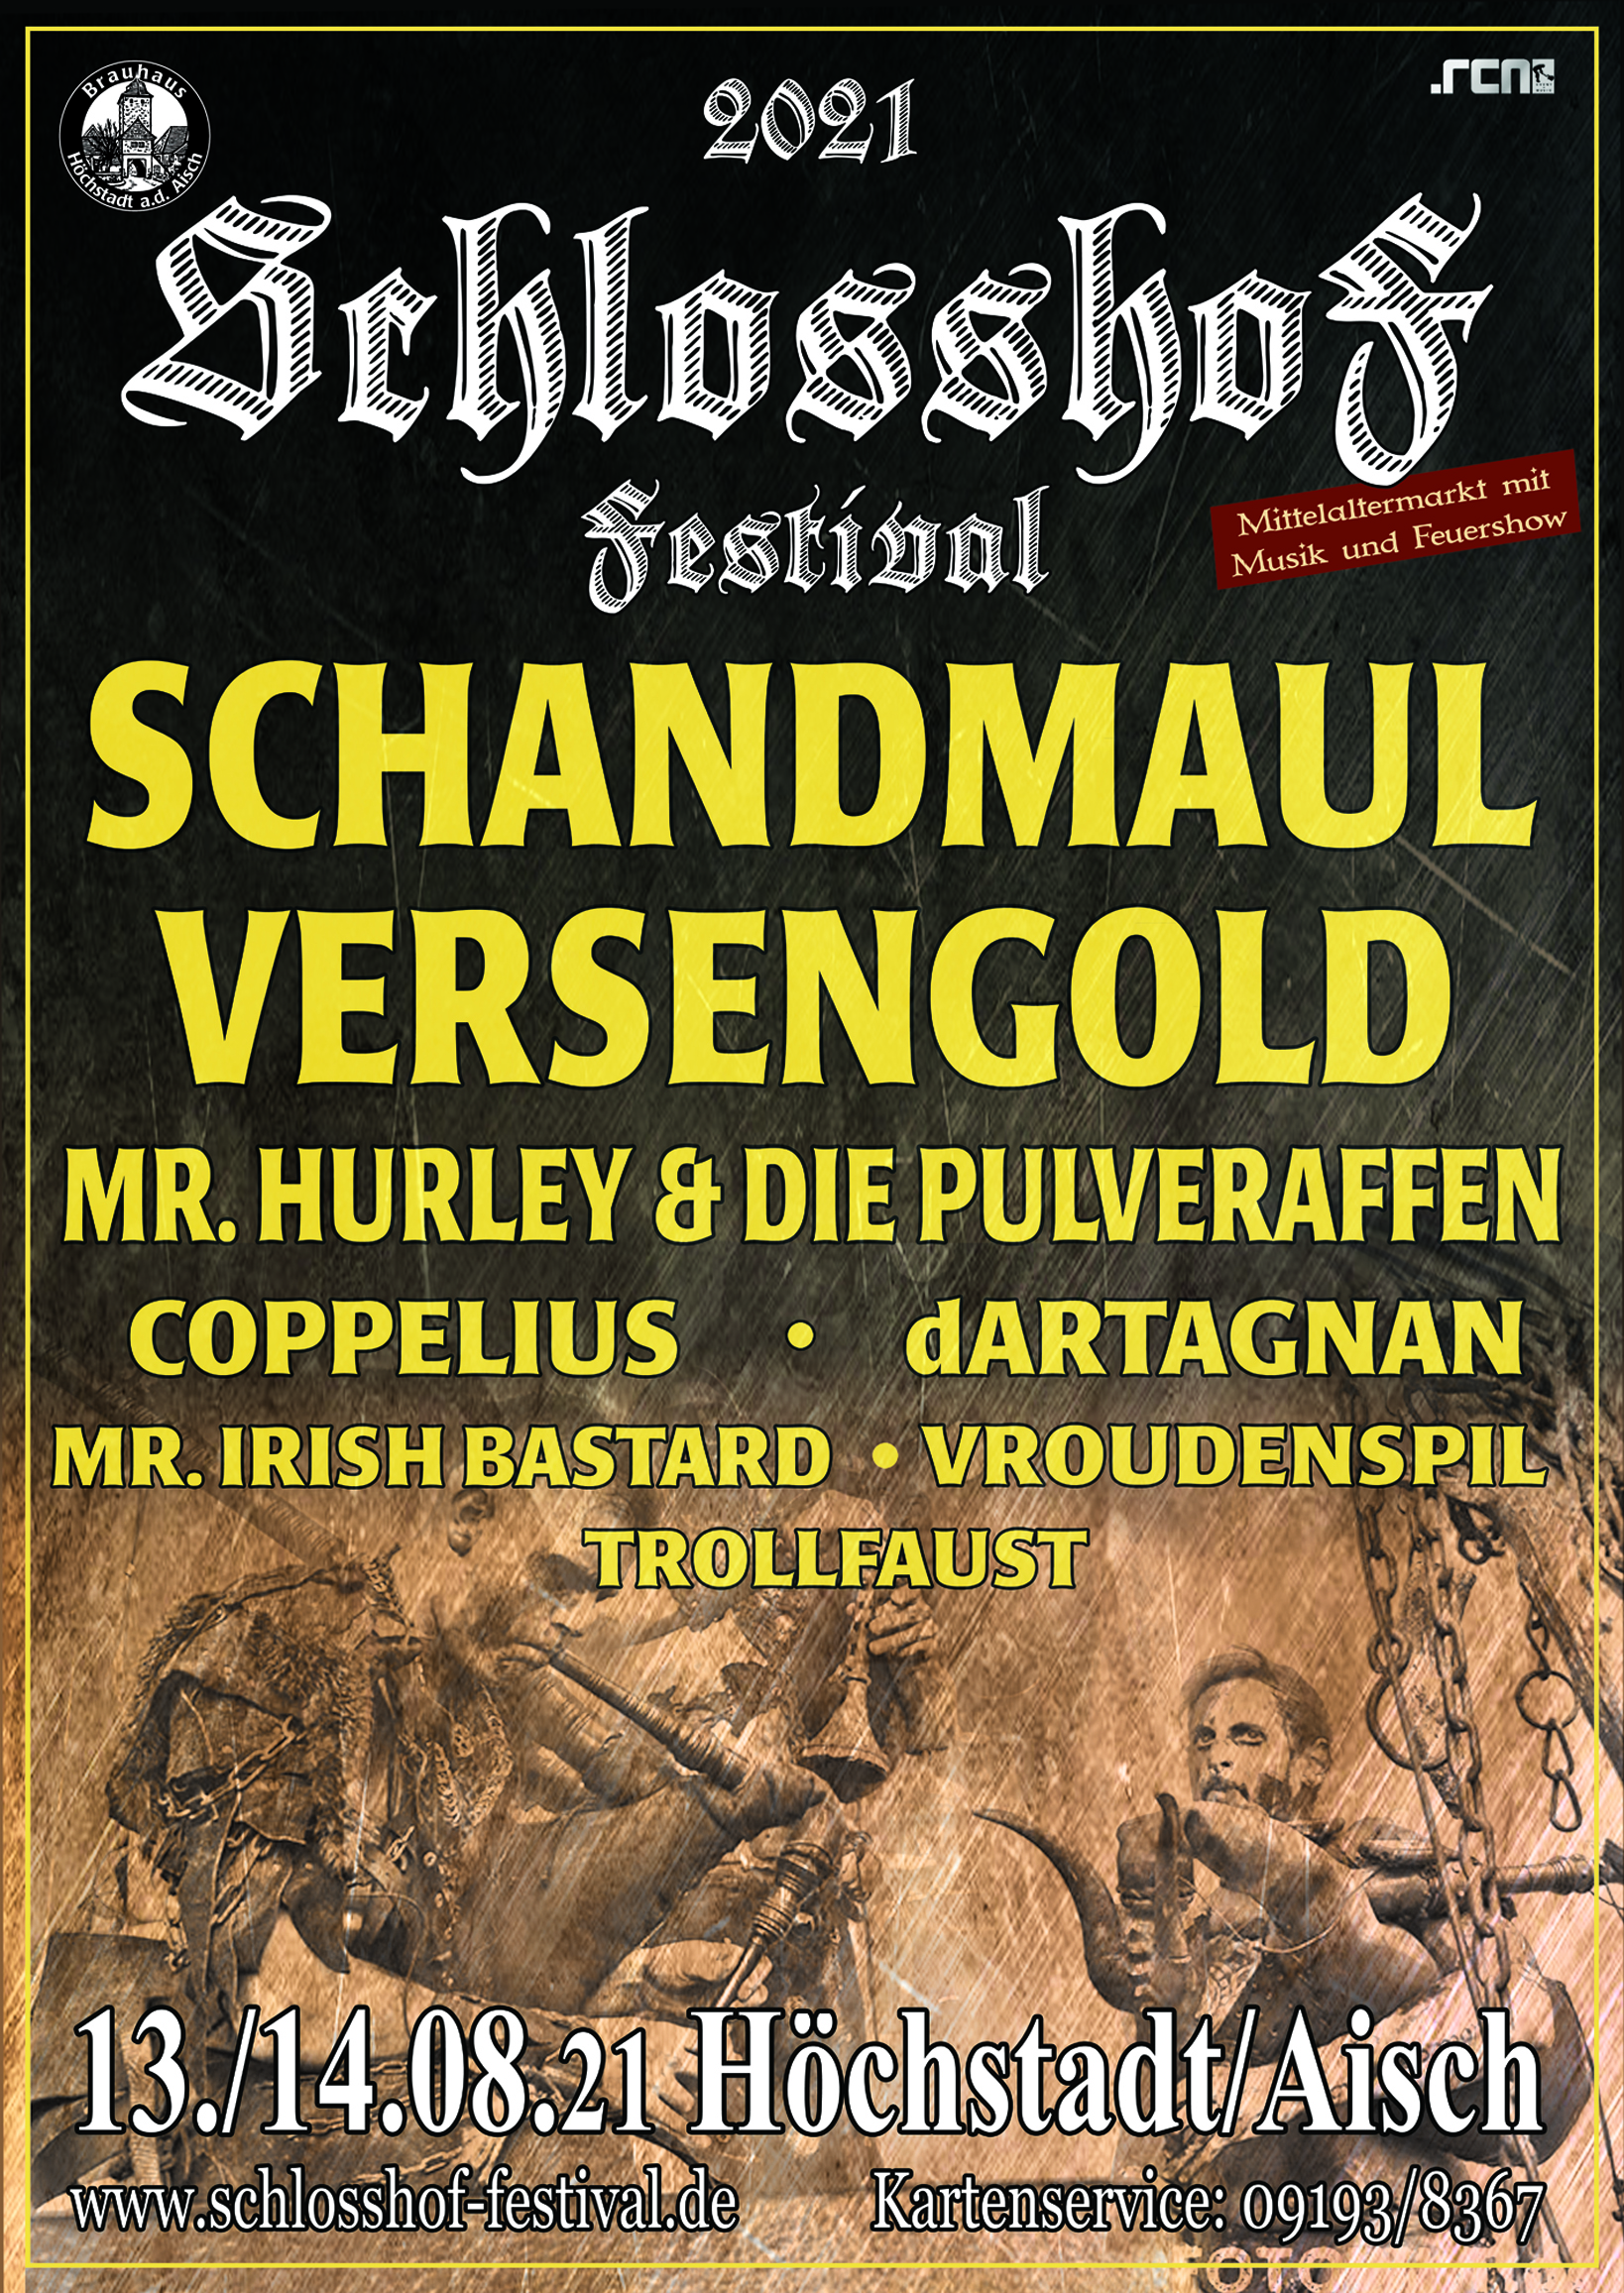 Plakat vom Schlosshof Festival 2021